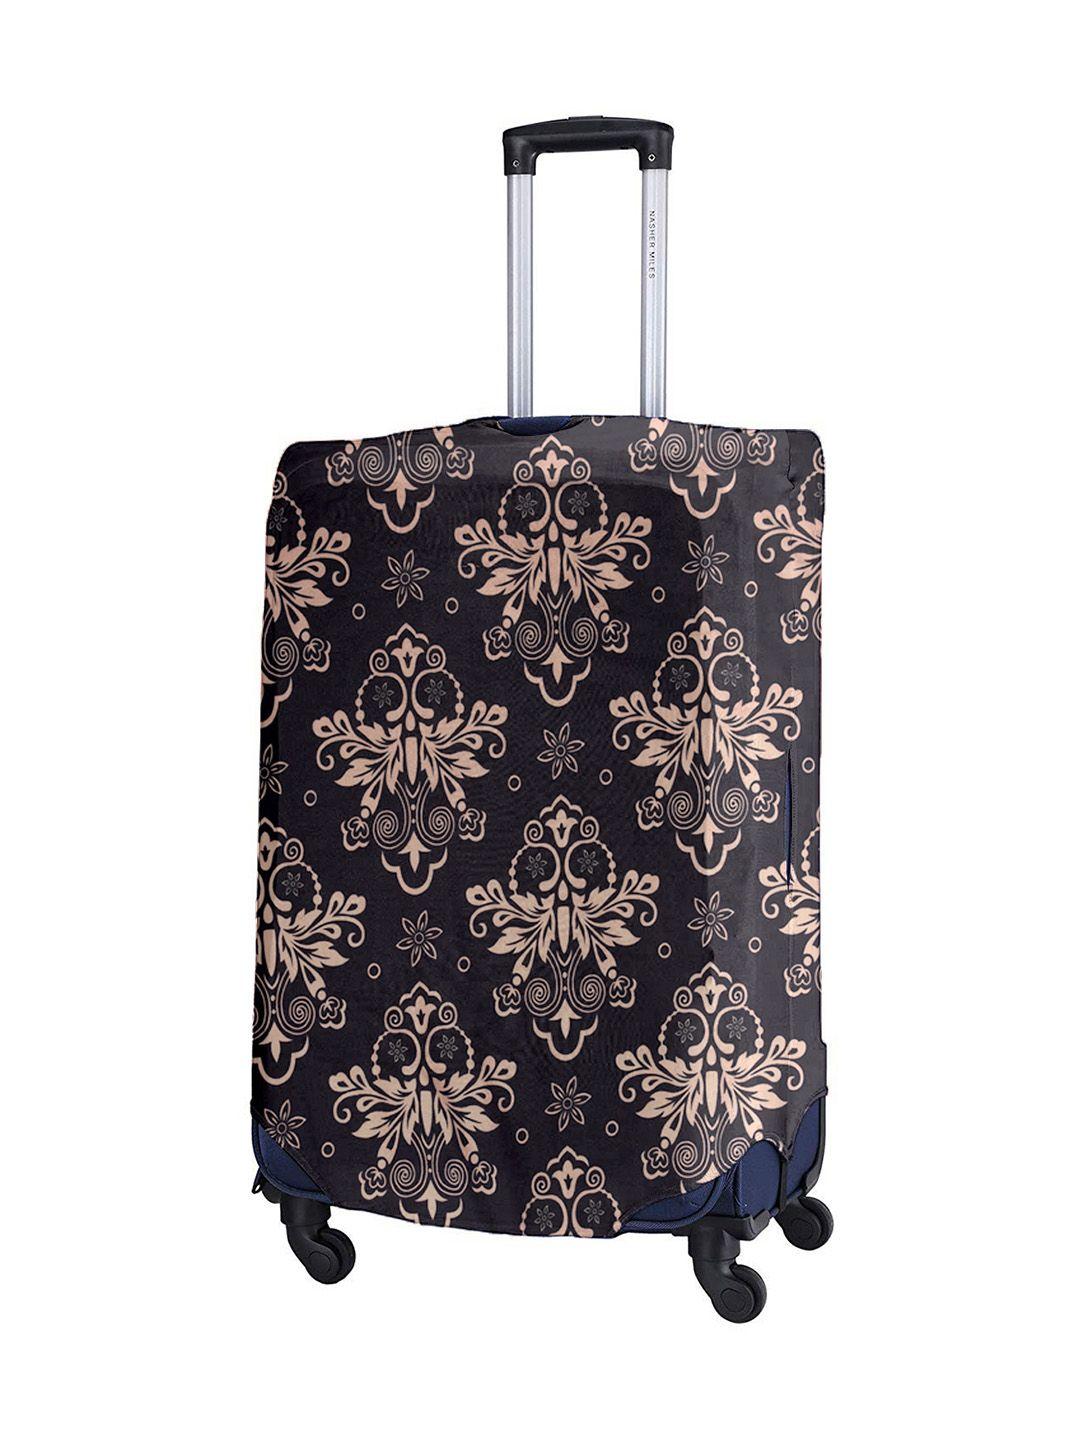 cortina-black-printed-protective-small-trolley-bag-cover